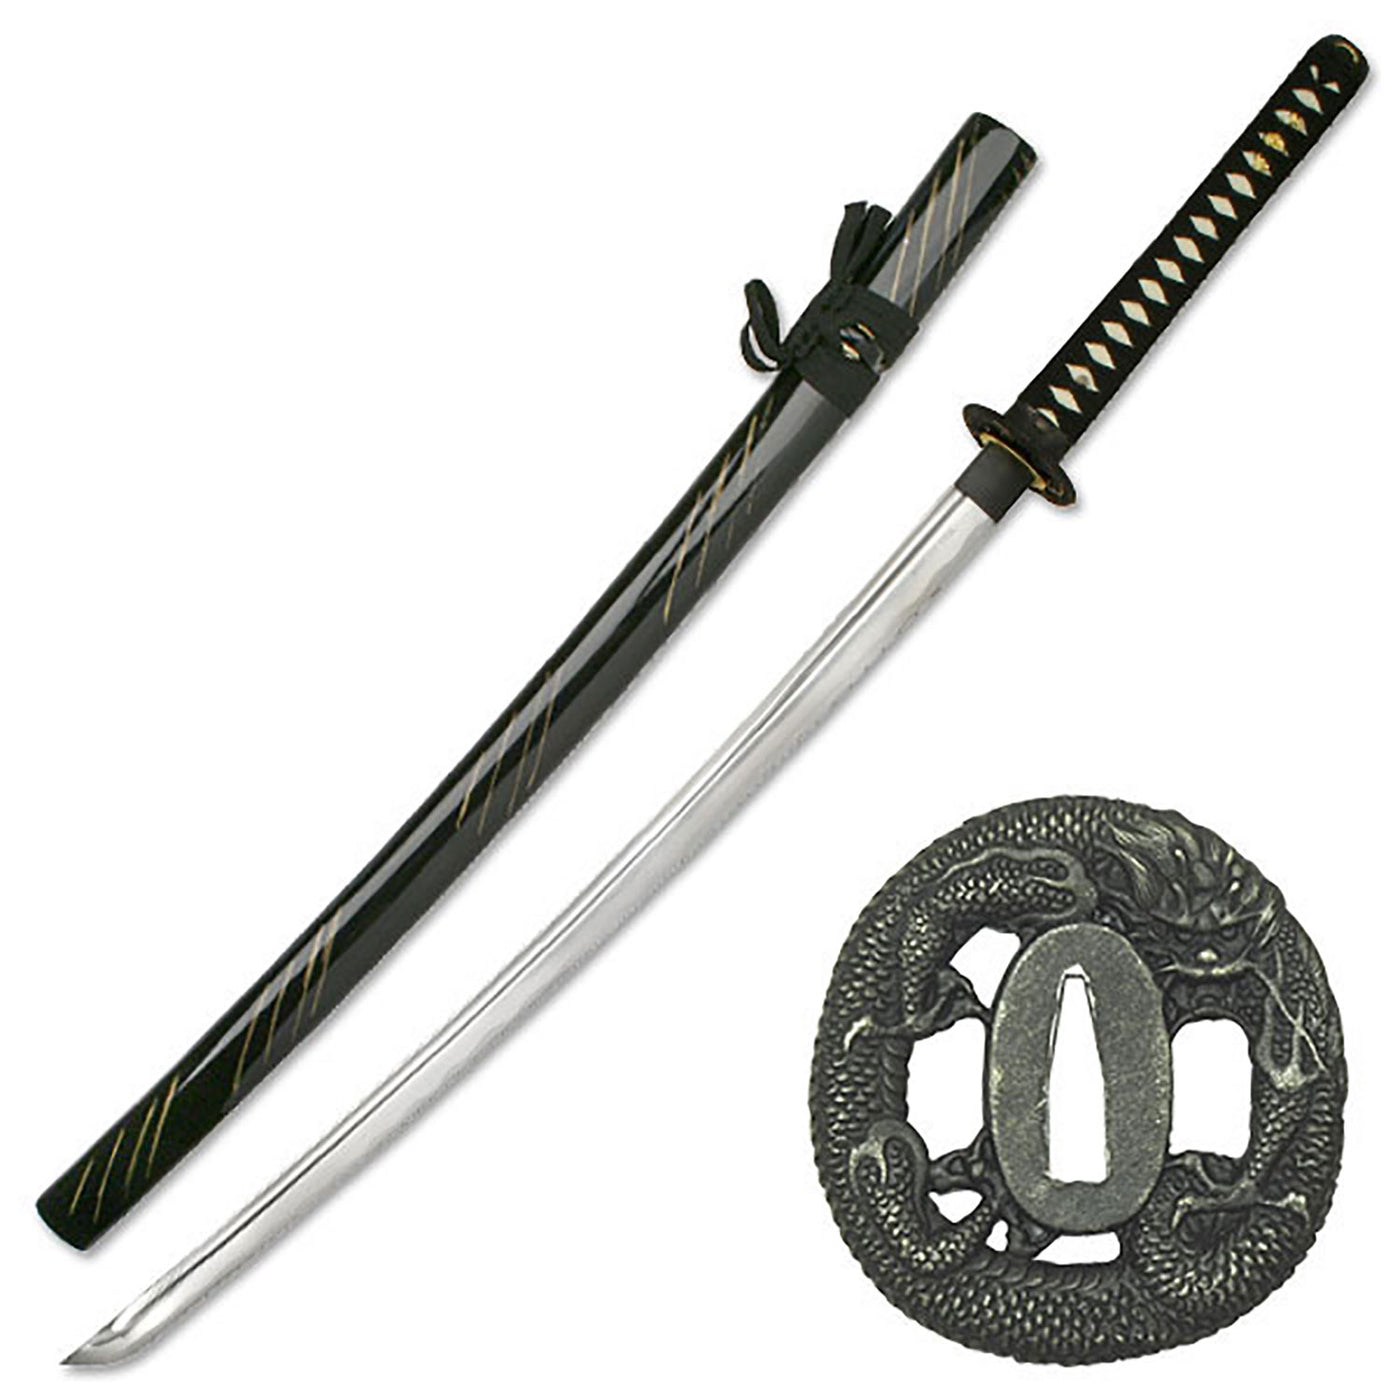 KATANA Samurai Sword 41" HAND FORGED BLADE WITH BLOOD GROOVE